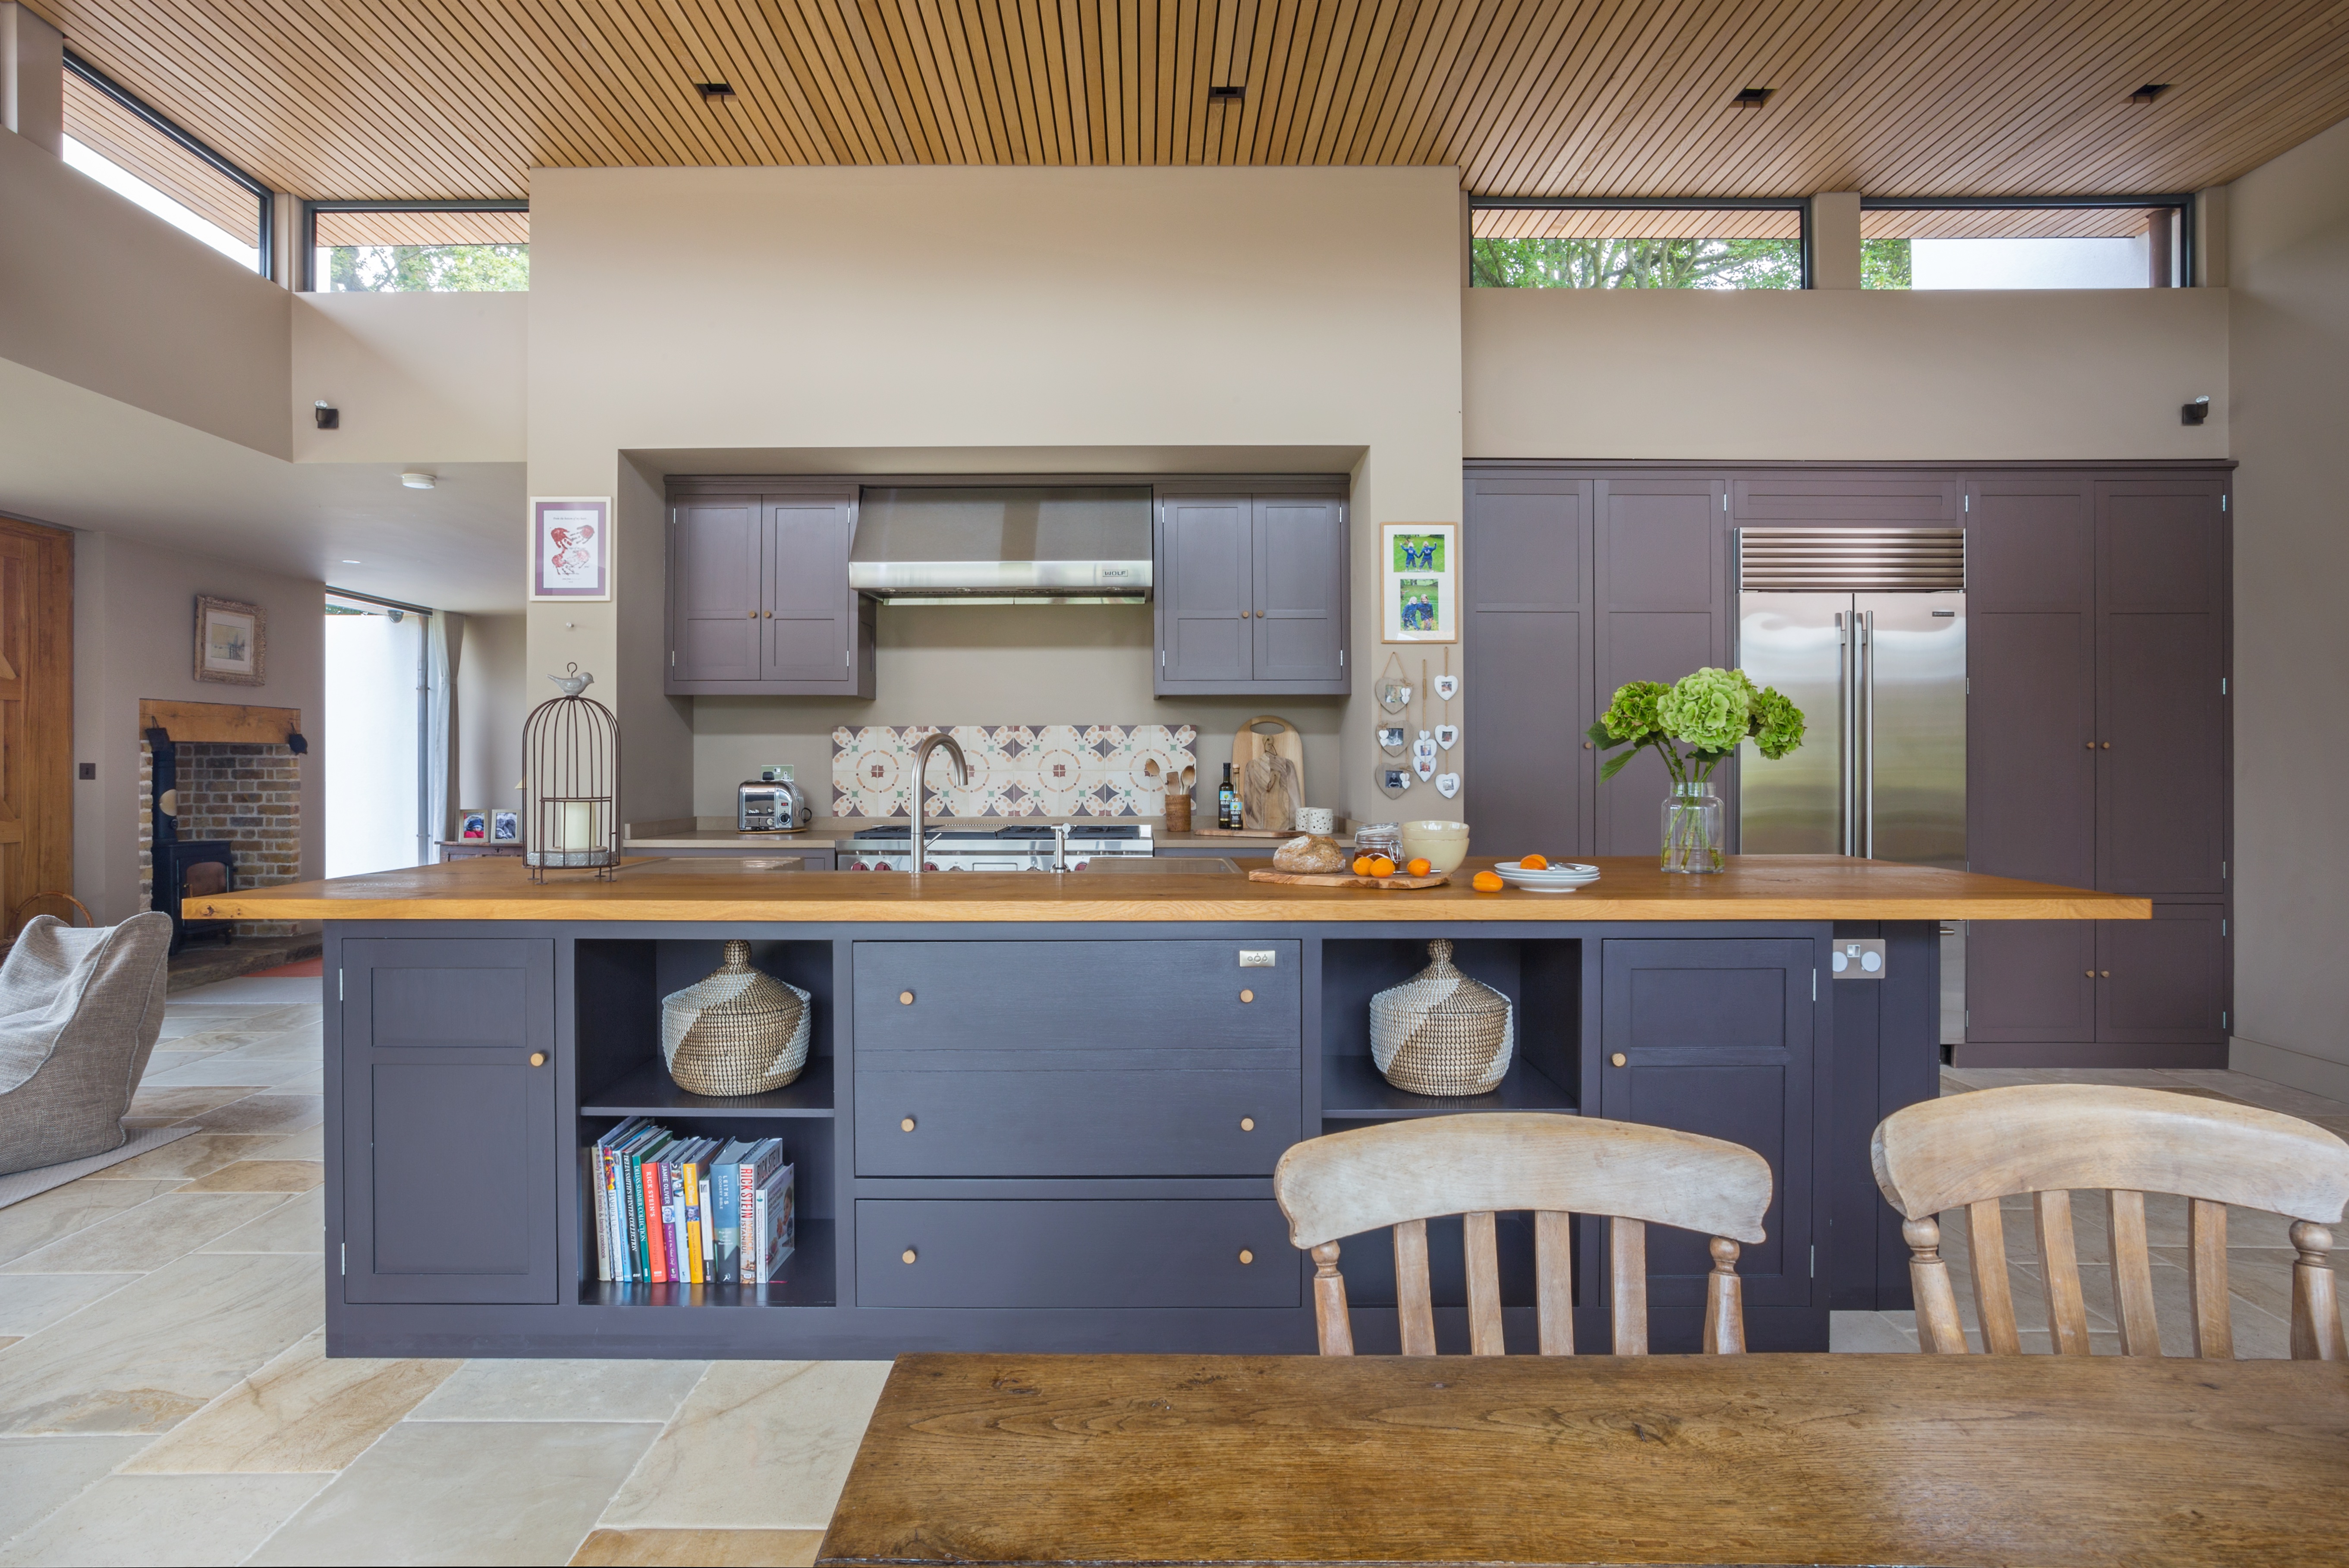 Handpainted cabinets in Farrow & Ball Clay 244 with rustic oak worktop on kitchen island and a Subzero fridge ICBBI 36UFDID.